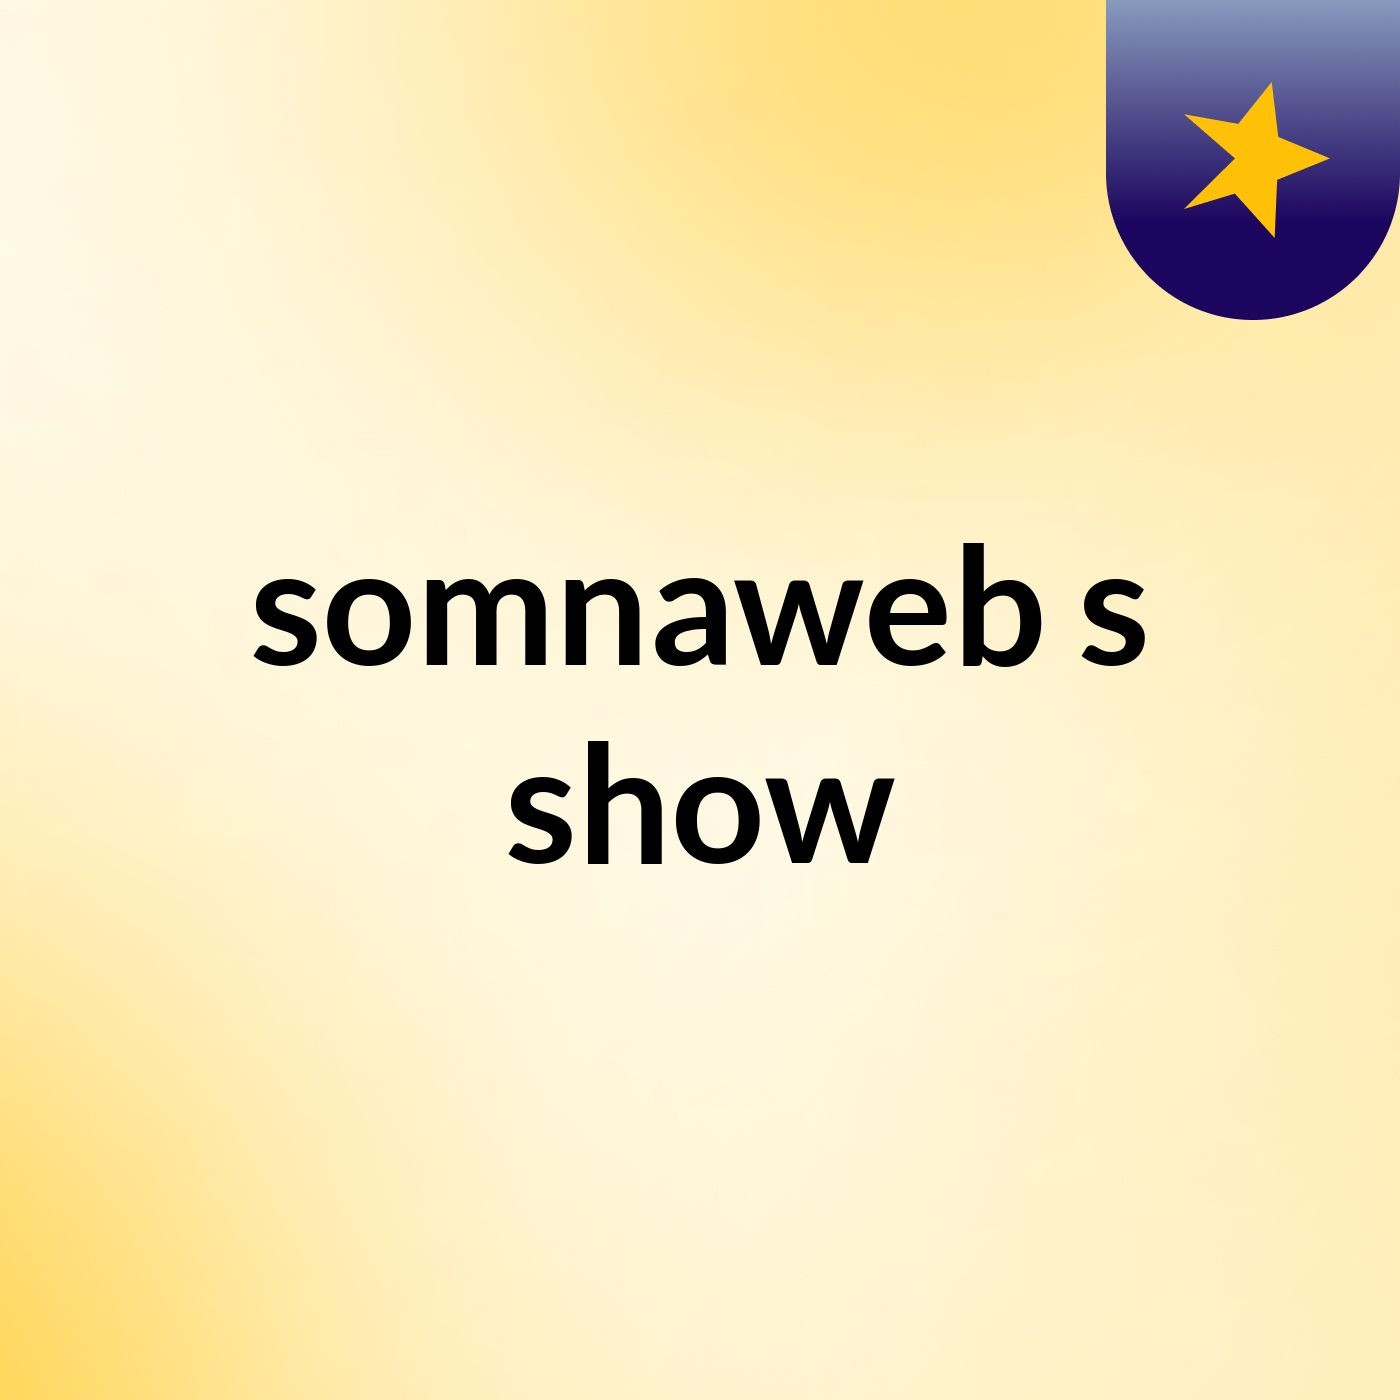 somnaweb's show